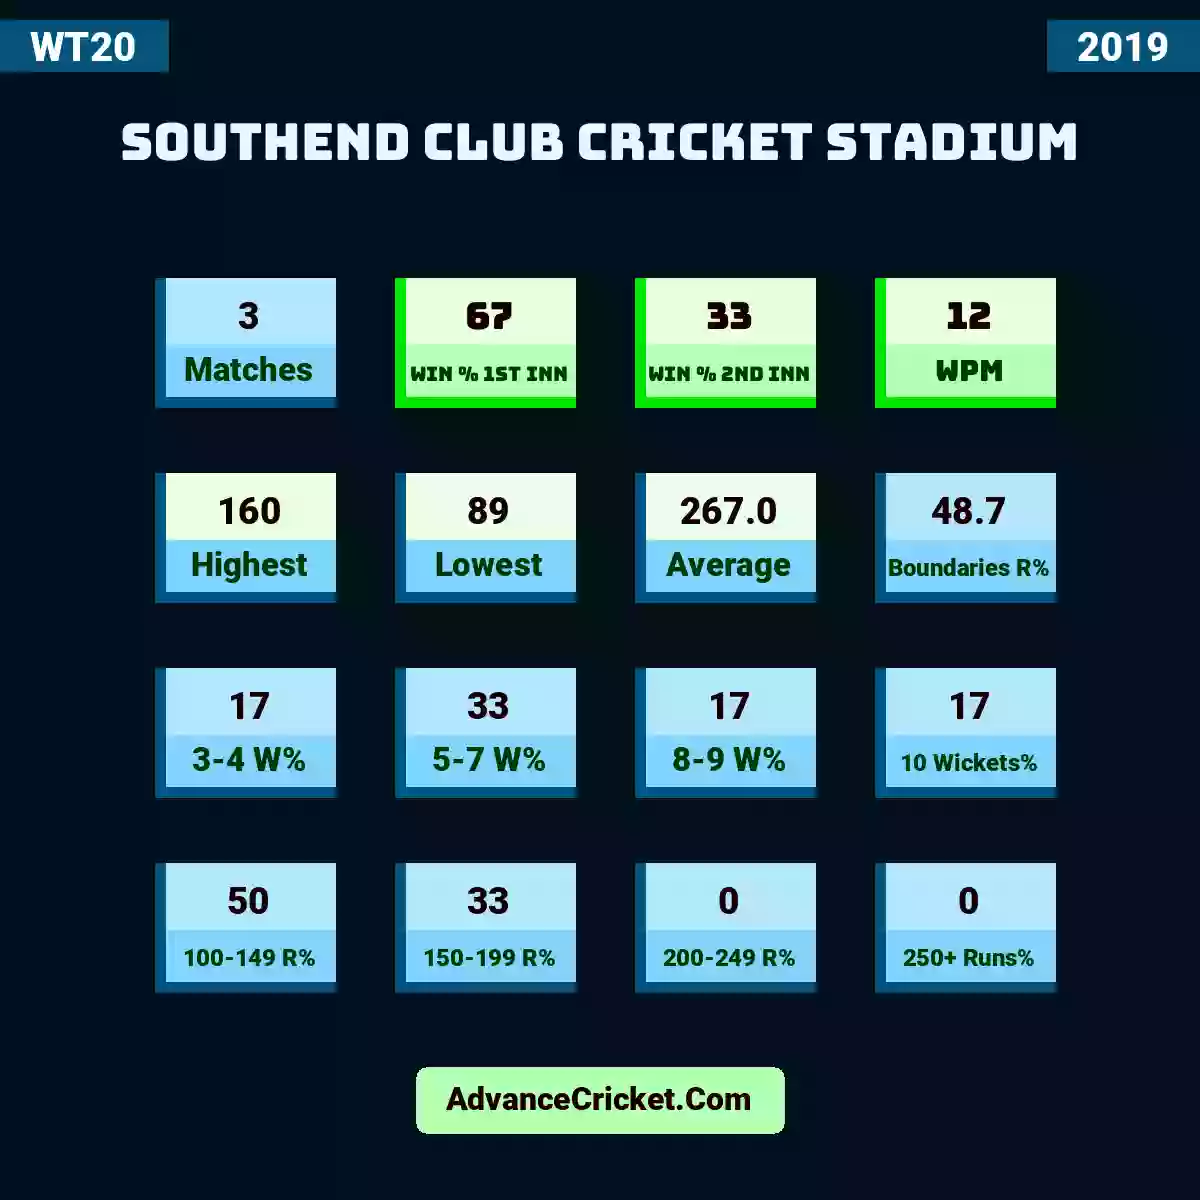 Image showing Southend Club Cricket Stadium with Matches: 3, Win % 1st Inn: 67, Win % 2nd Inn: 33, WPM: 12, Highest: 160, Lowest: 89, Average: 267.0, Boundaries R%: 48.7, 3-4 W%: 17, 5-7 W%: 33, 8-9 W%: 17, 10 Wickets%: 17, 100-149 R%: 50, 150-199 R%: 33, 200-249 R%: 0, 250+ Runs%: 0.